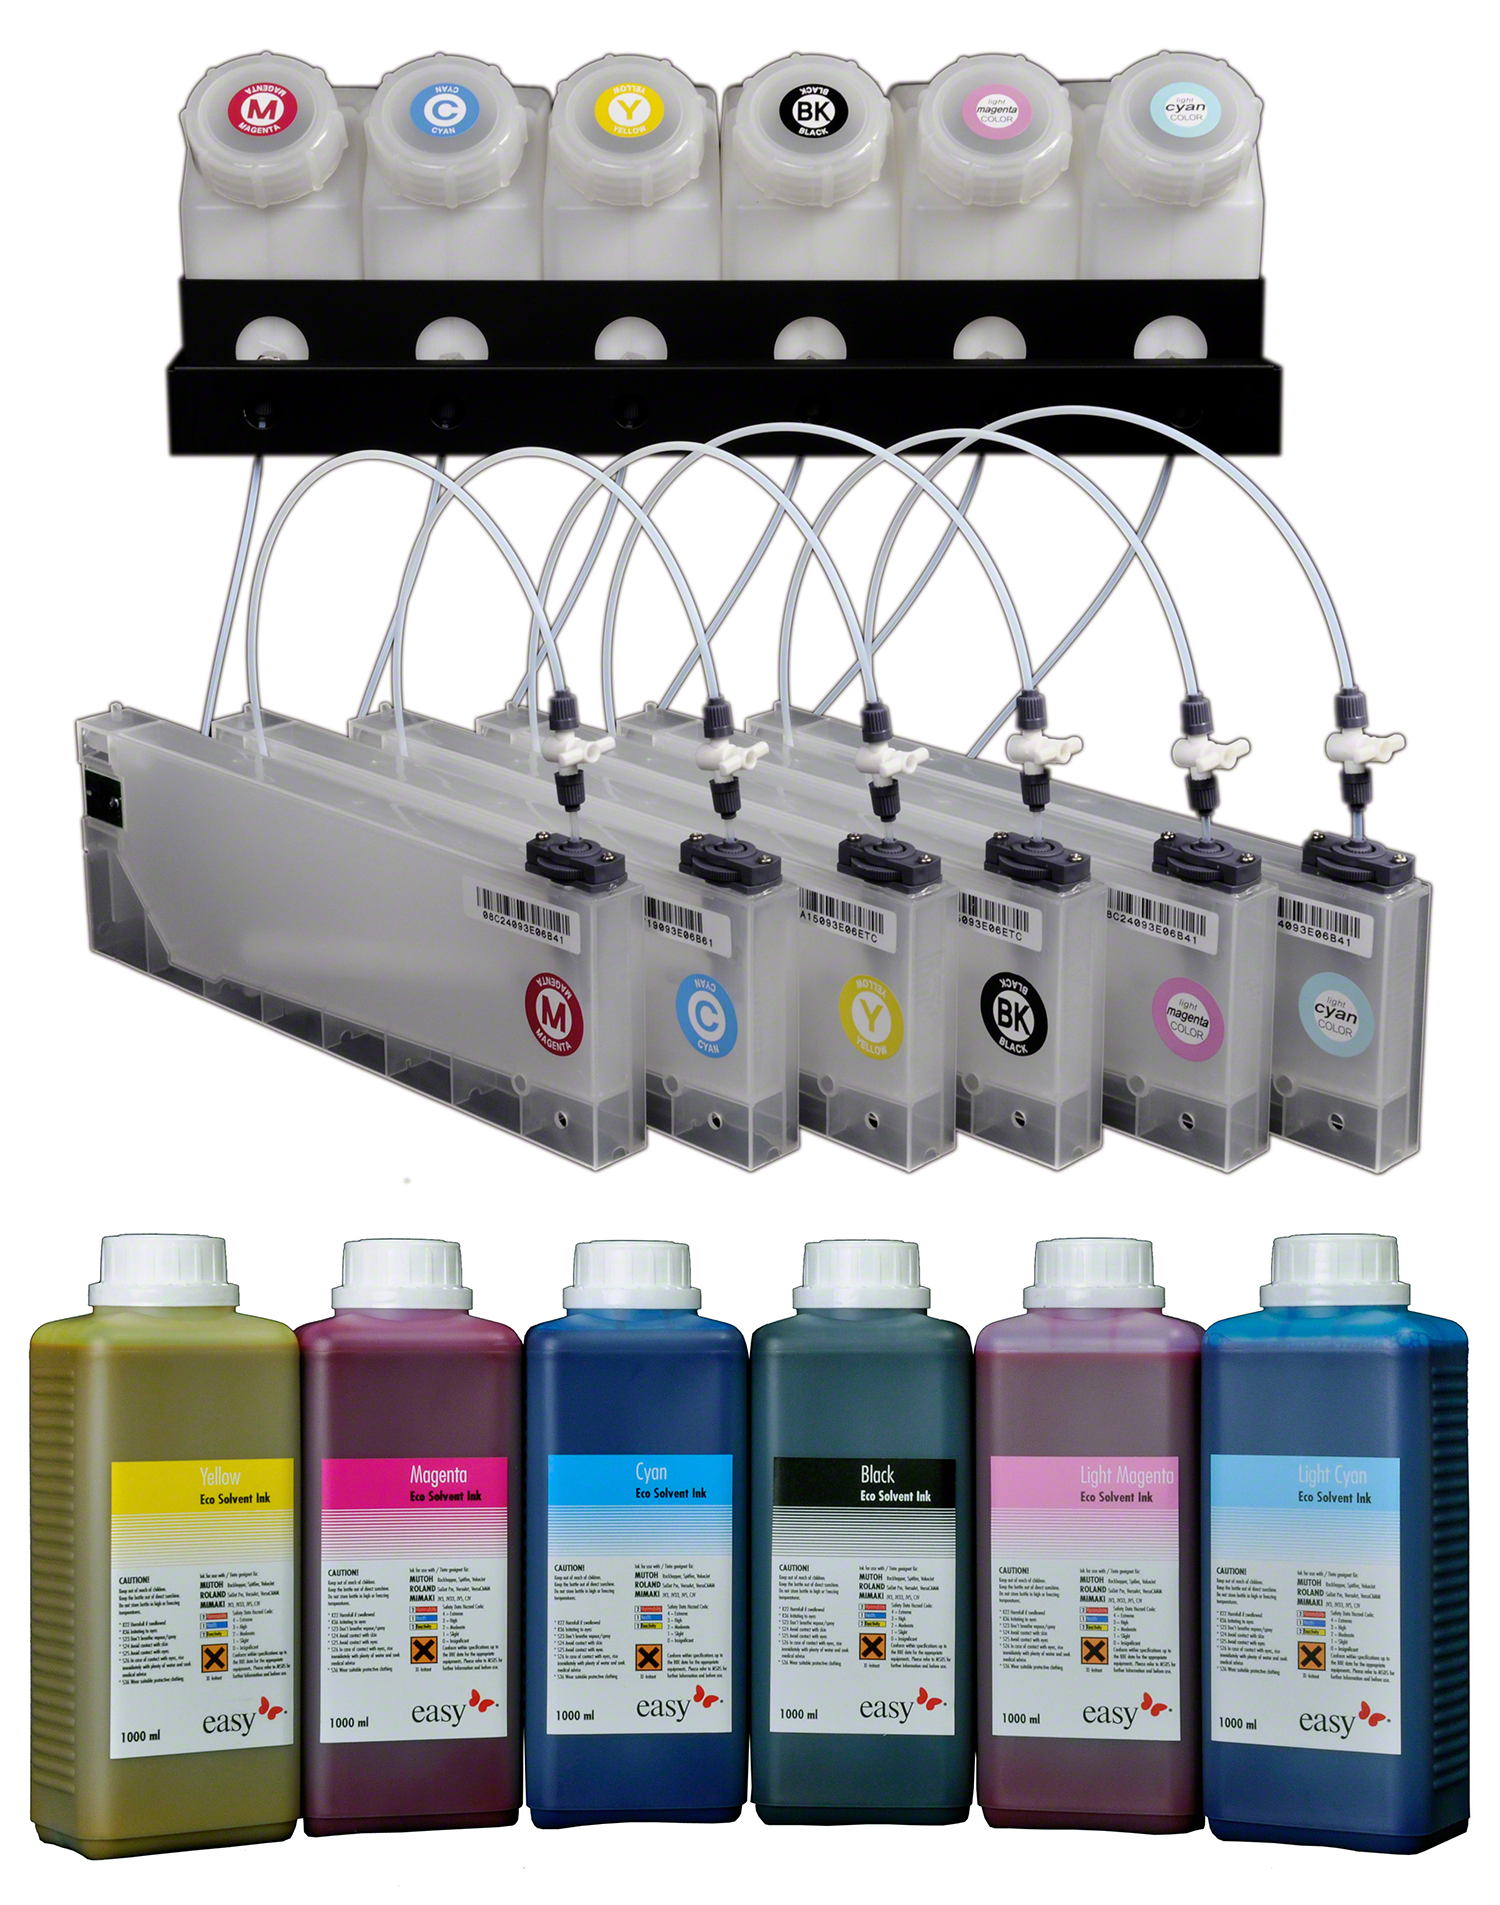 Blockoffer easyTank Ink Supply System with 6 tanks and 6 cartridges for Mimaki JV3, inkl. 1 liter solvent ink per color